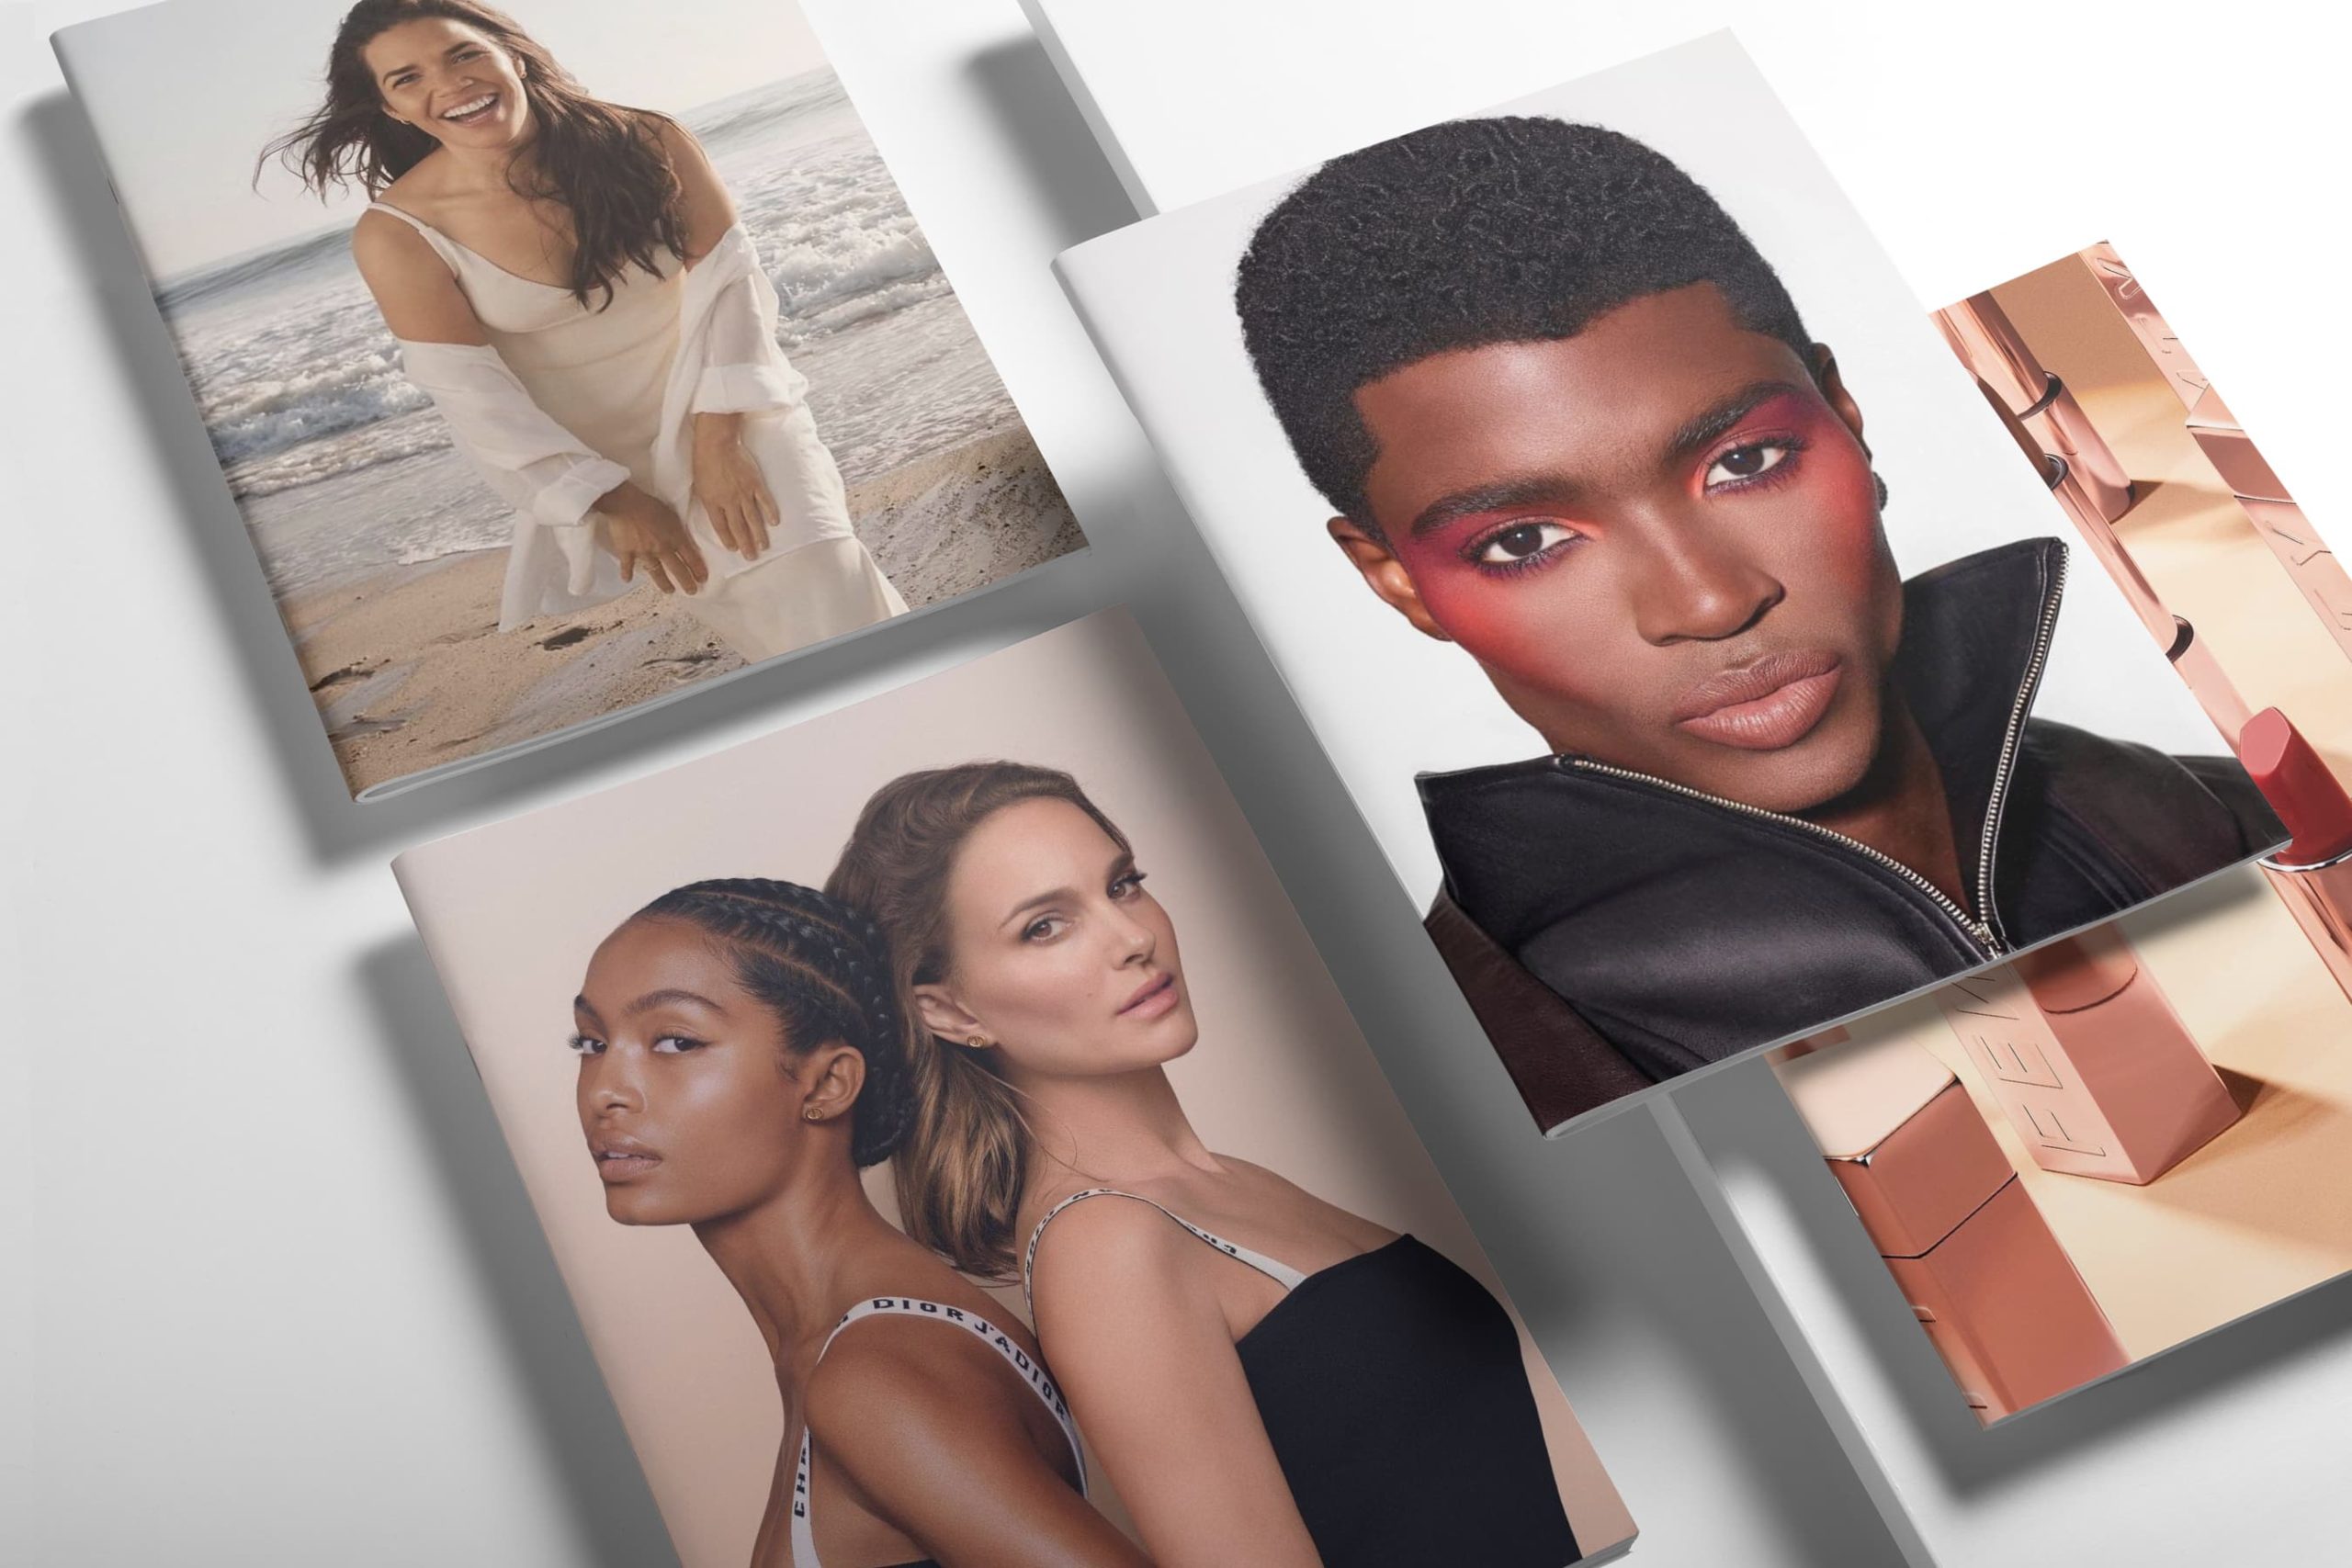 Beauty Ad Campaigns Summer/Fall — PhotoBook Magazine